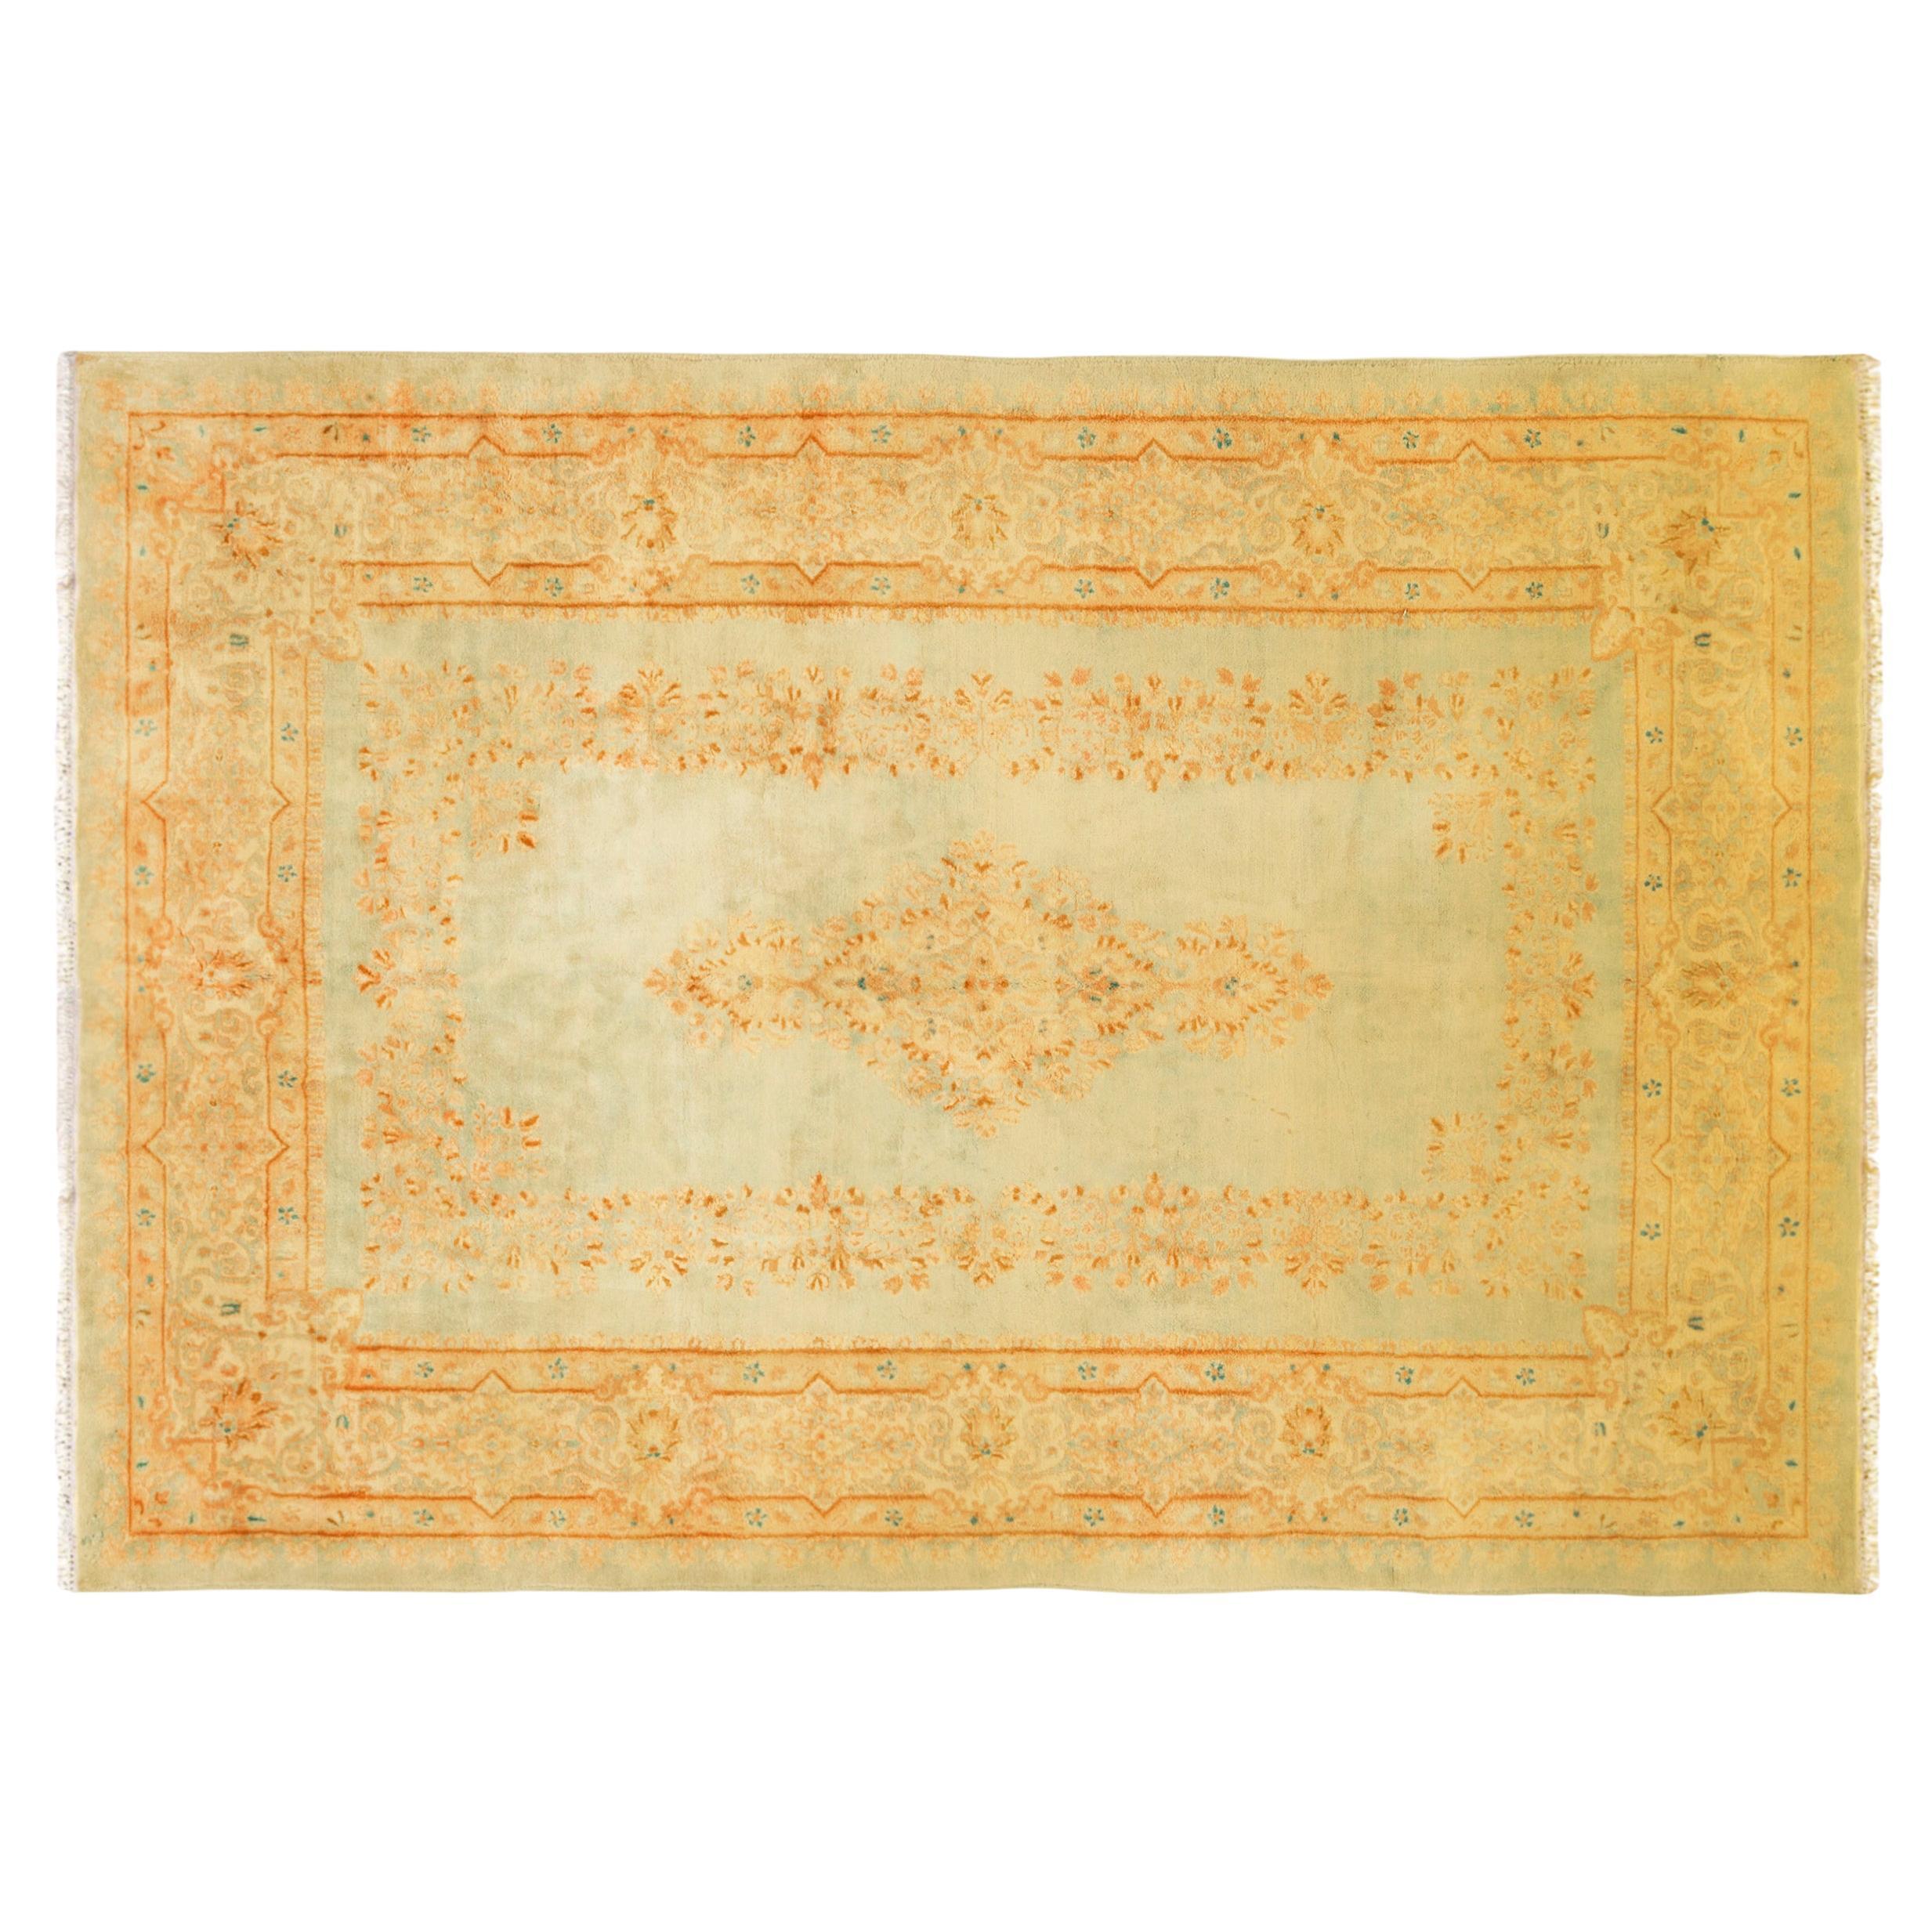 Vintage Persian Decorative Orienta Kerman Rug in Room Size 